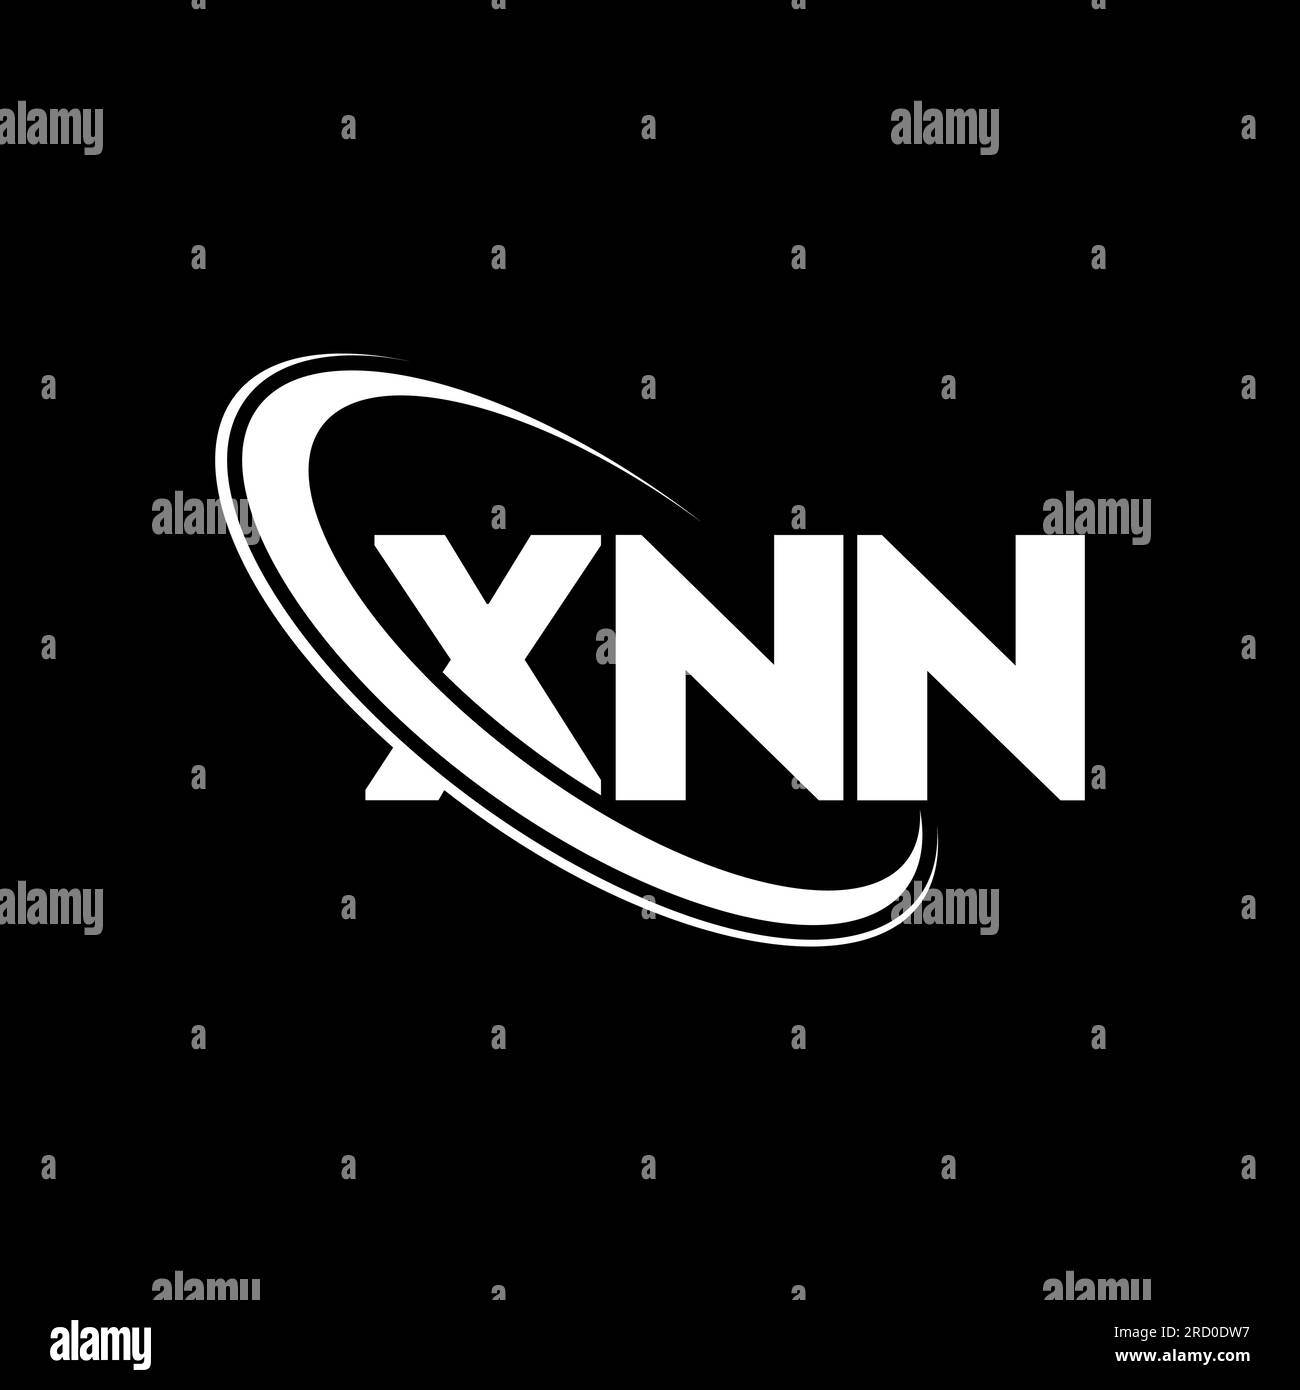 Xnn monogram Black and White Stock Photos & Images - Alamy